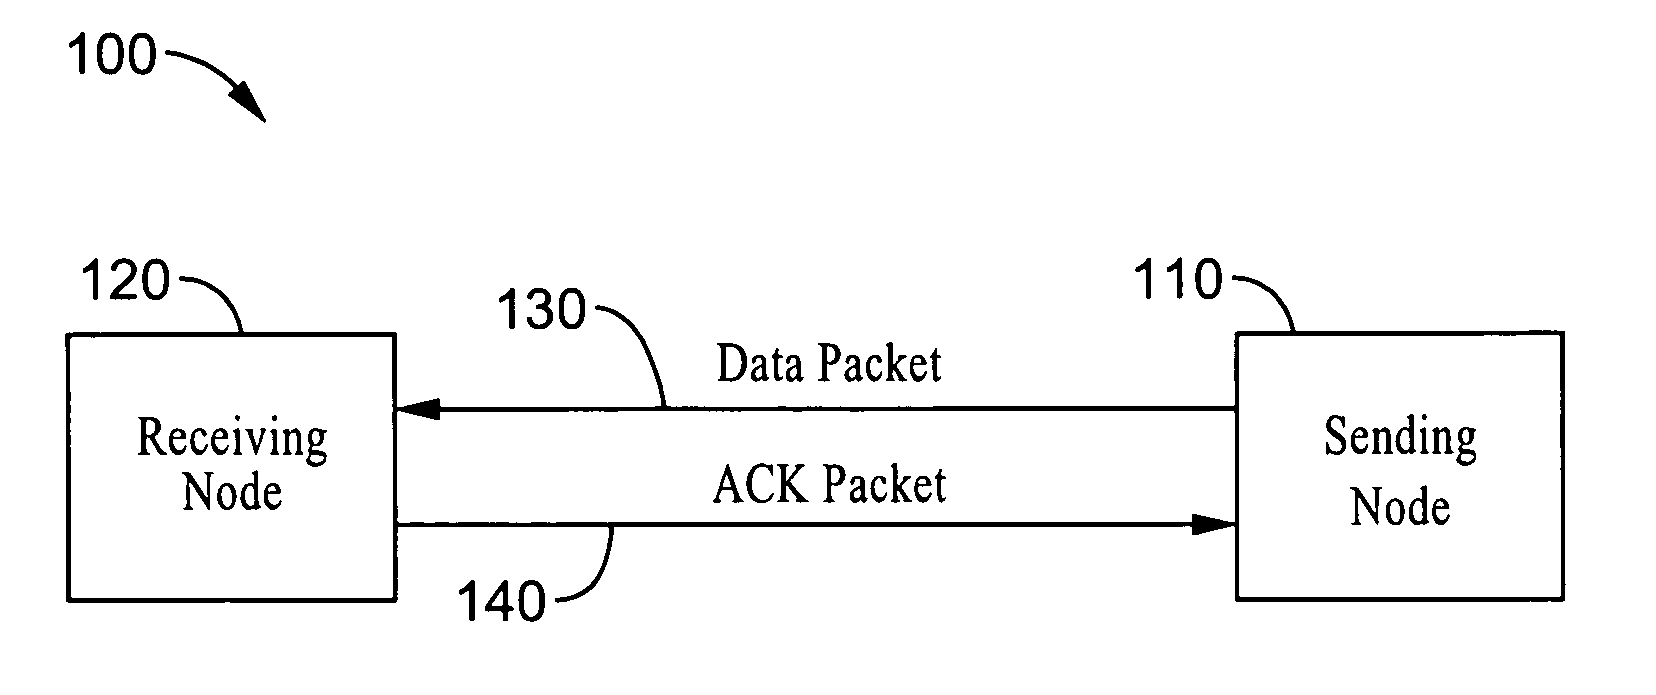 TCP congestion control based on bandwidth estimation techniques